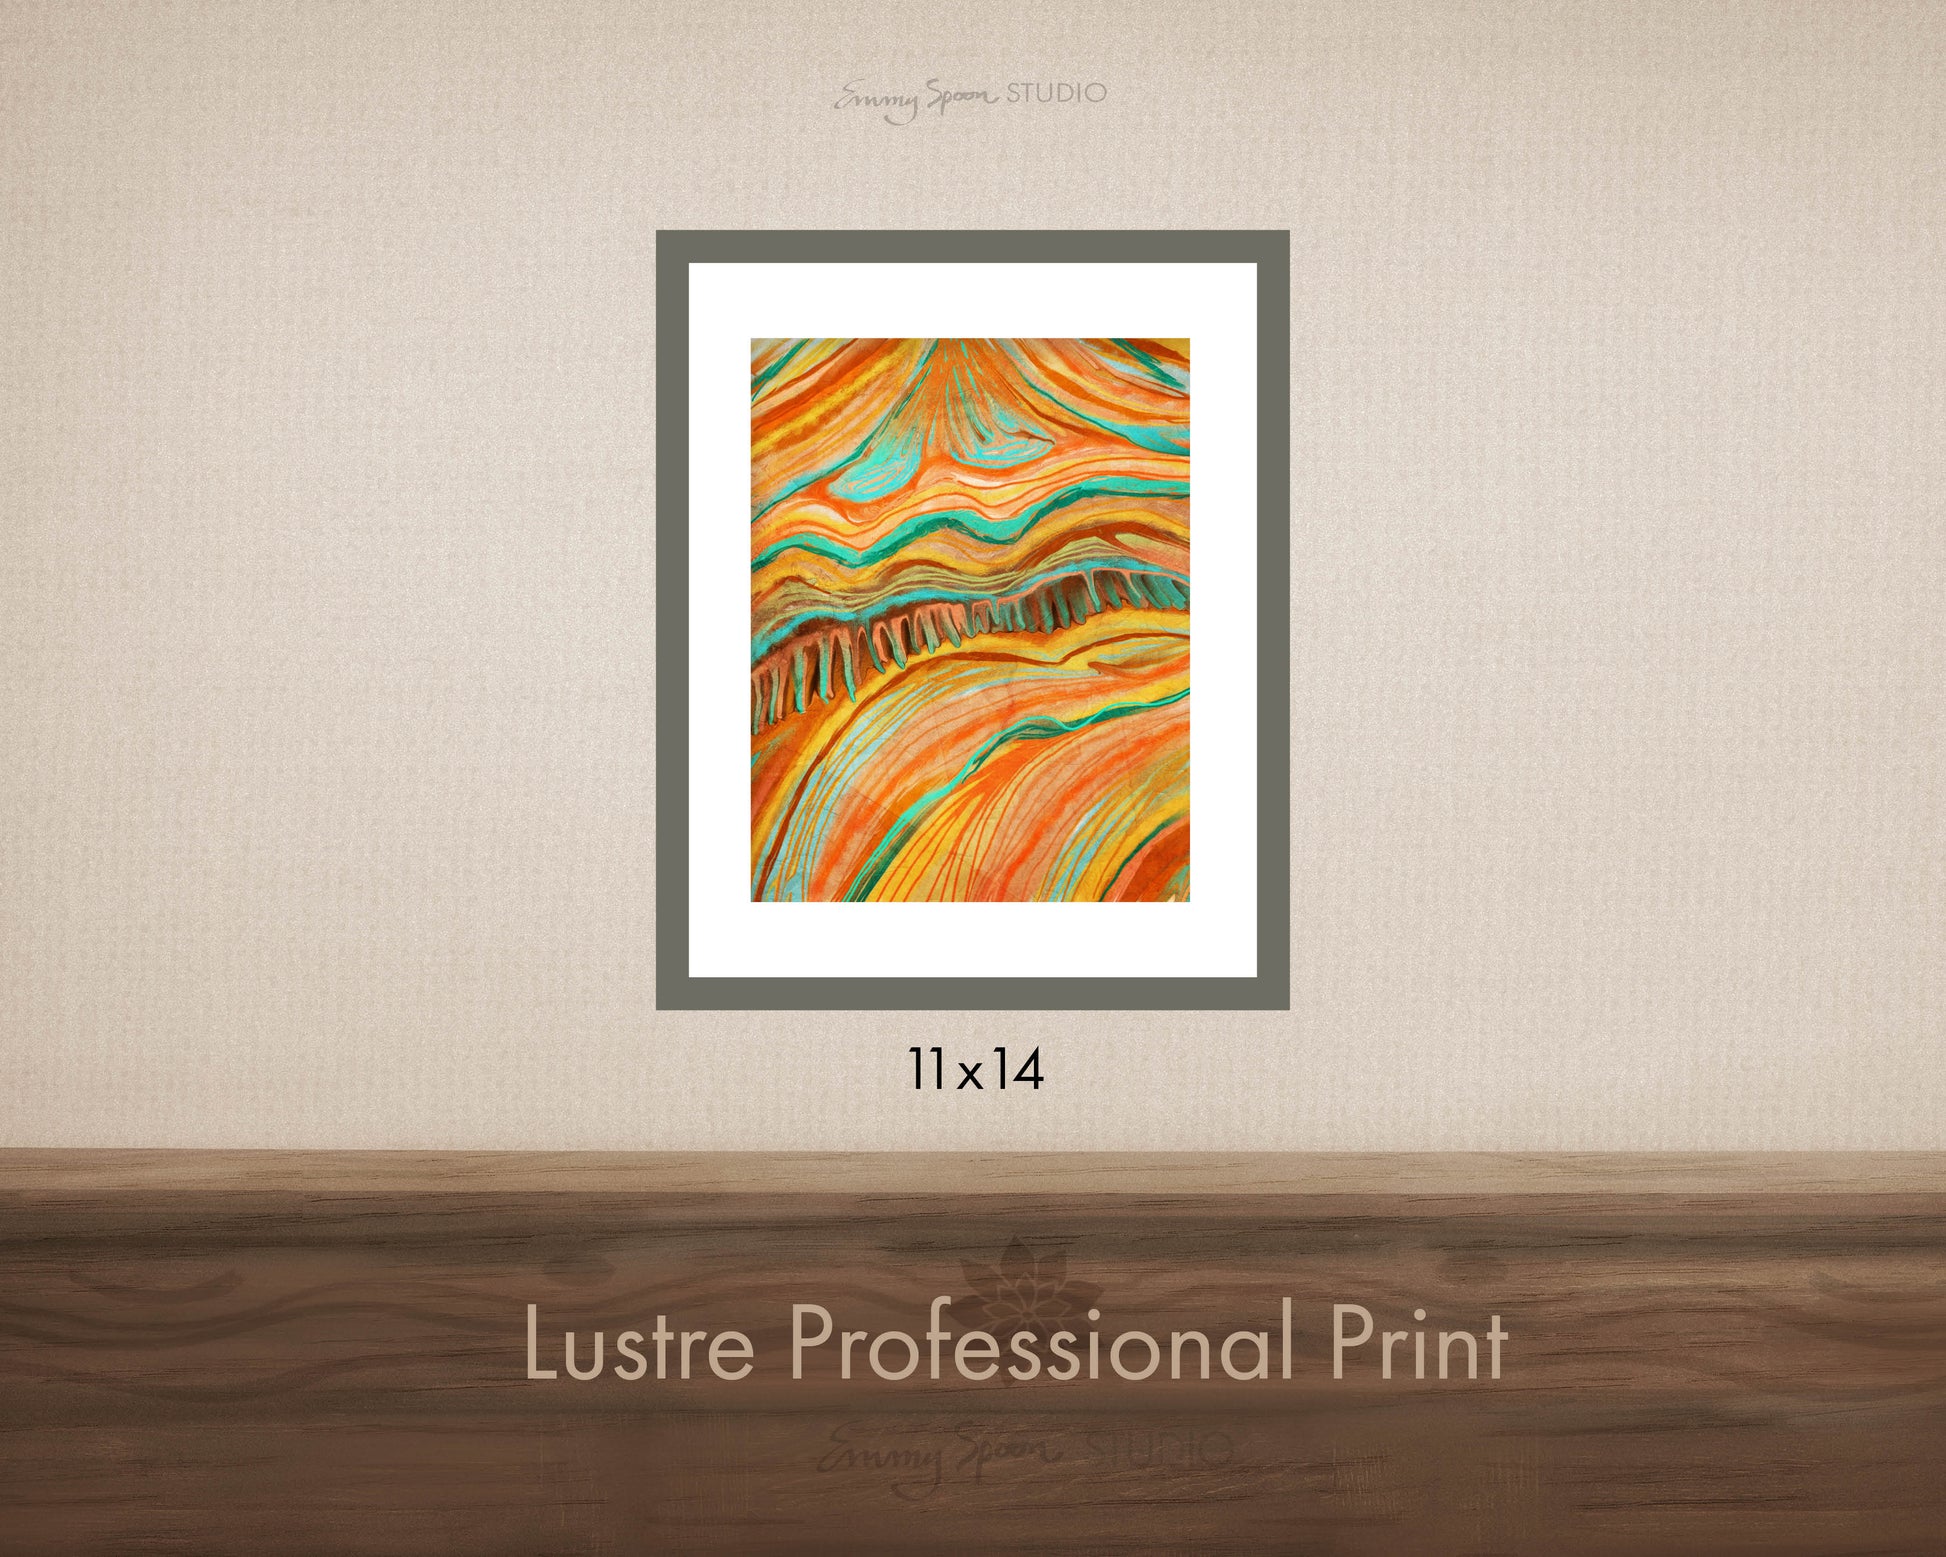 Lustre Art Print Summer Vibes (2022) by Emmy Spoon Studio 11x14 Lustre Professional Print